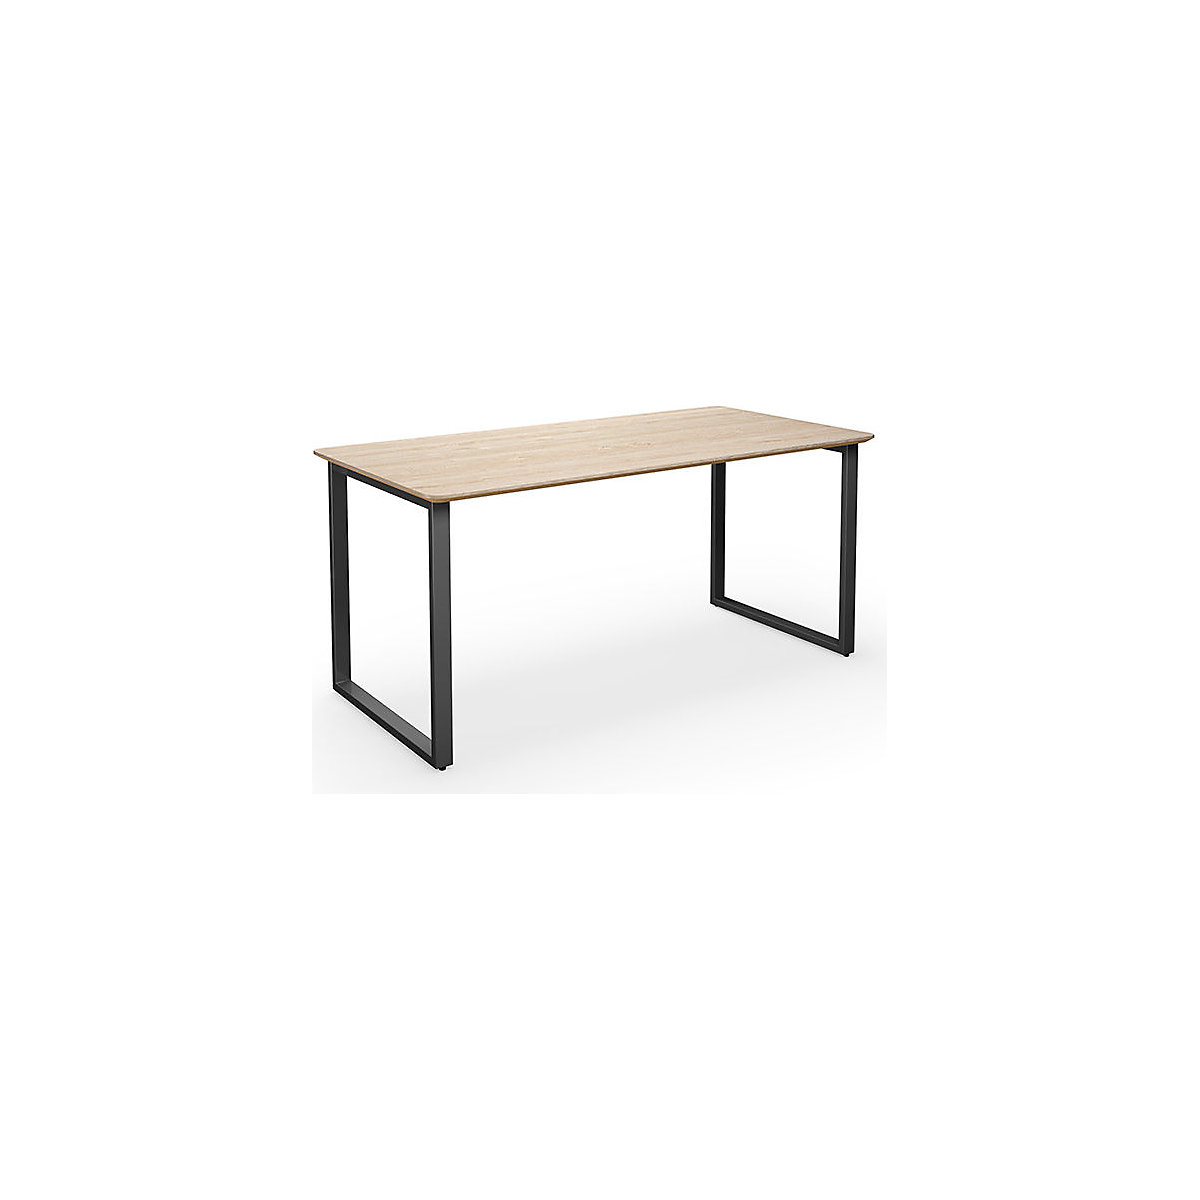 DUO-O Trend multi-purpose desk, straight tabletop, rounded corners, WxD 1400 x 800 mm, oak, black-3